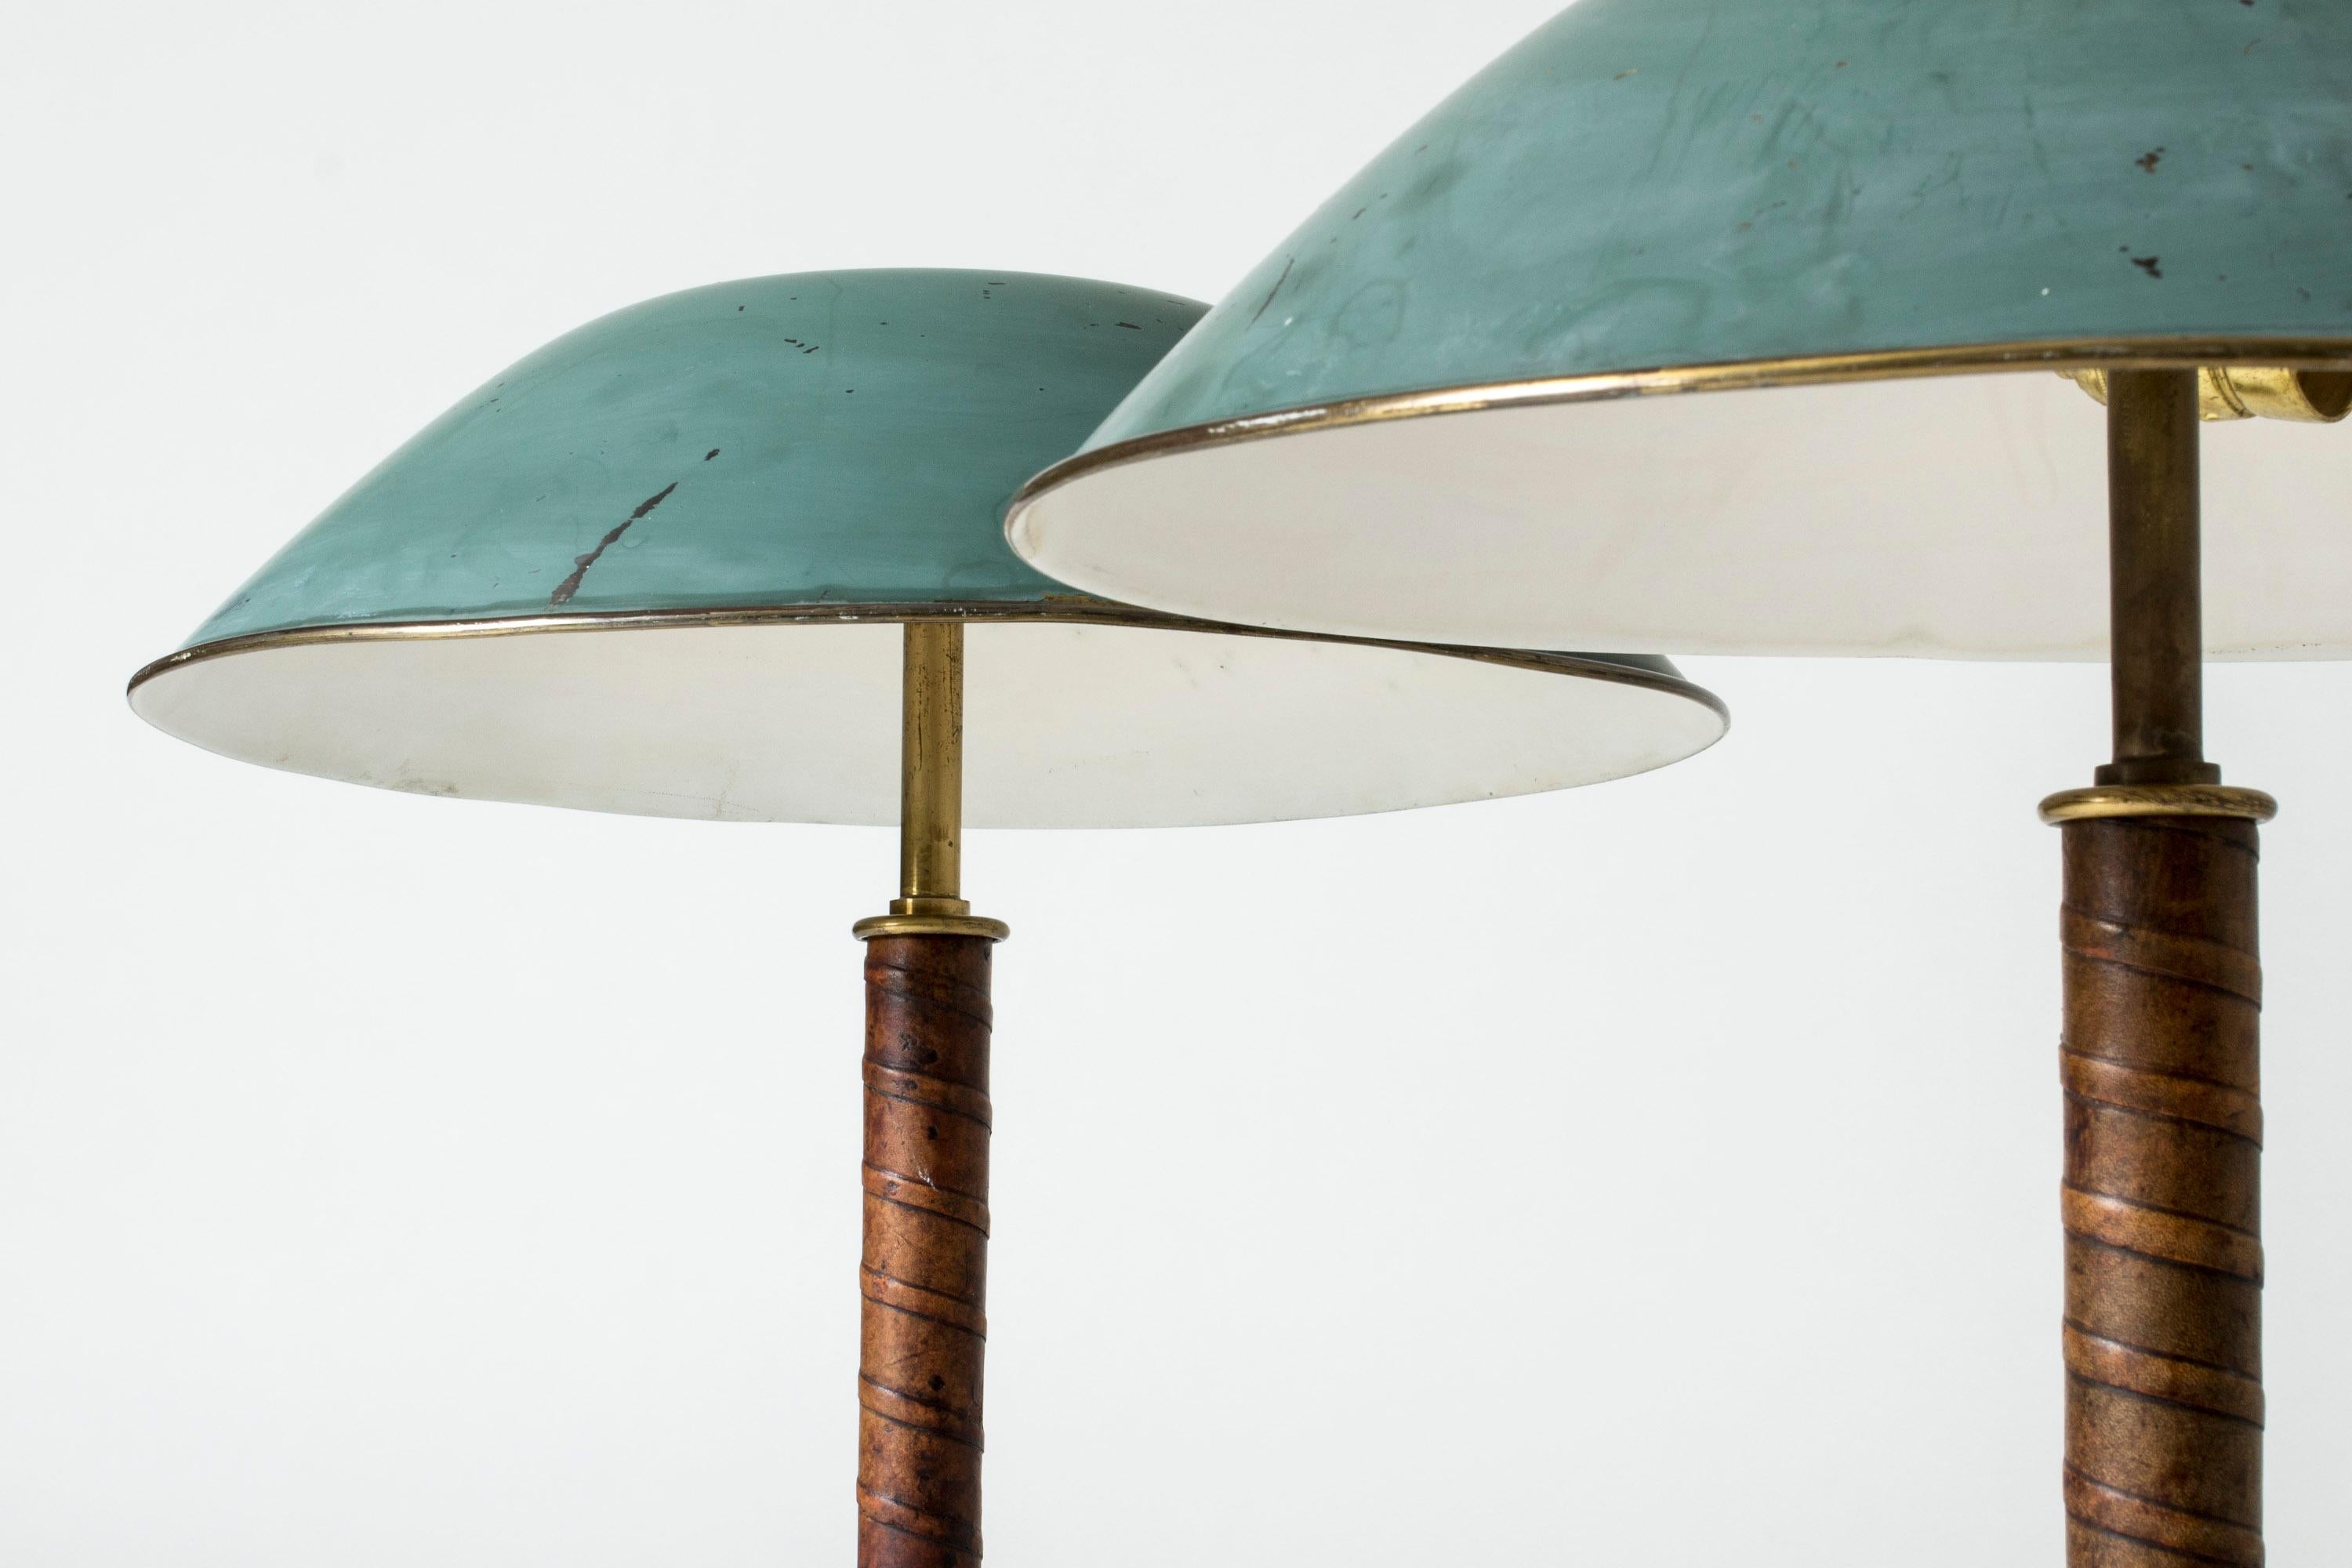 Scandinavian Modern Pair of Midcentury Table Lamps from NK, Sweden, 1940s